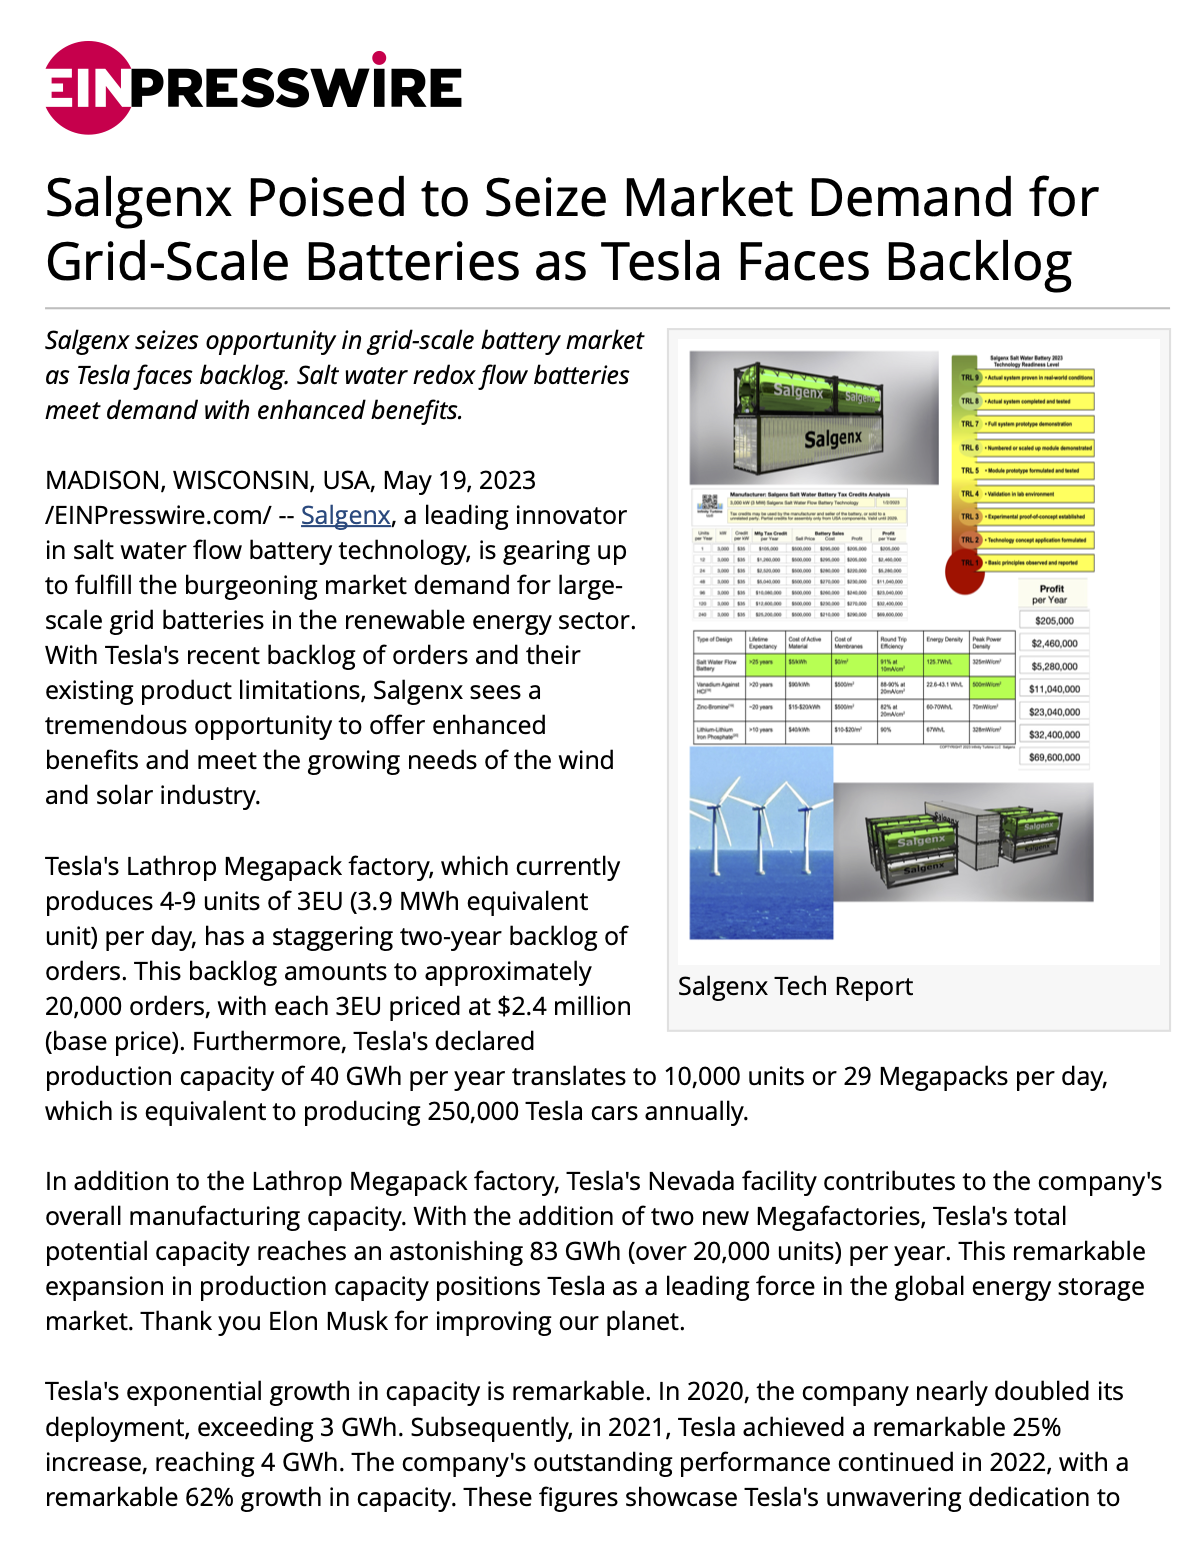 Salgenx Poised to Seize Market Demand for Grid-Scale Batteries as Tesla Faces Backlog